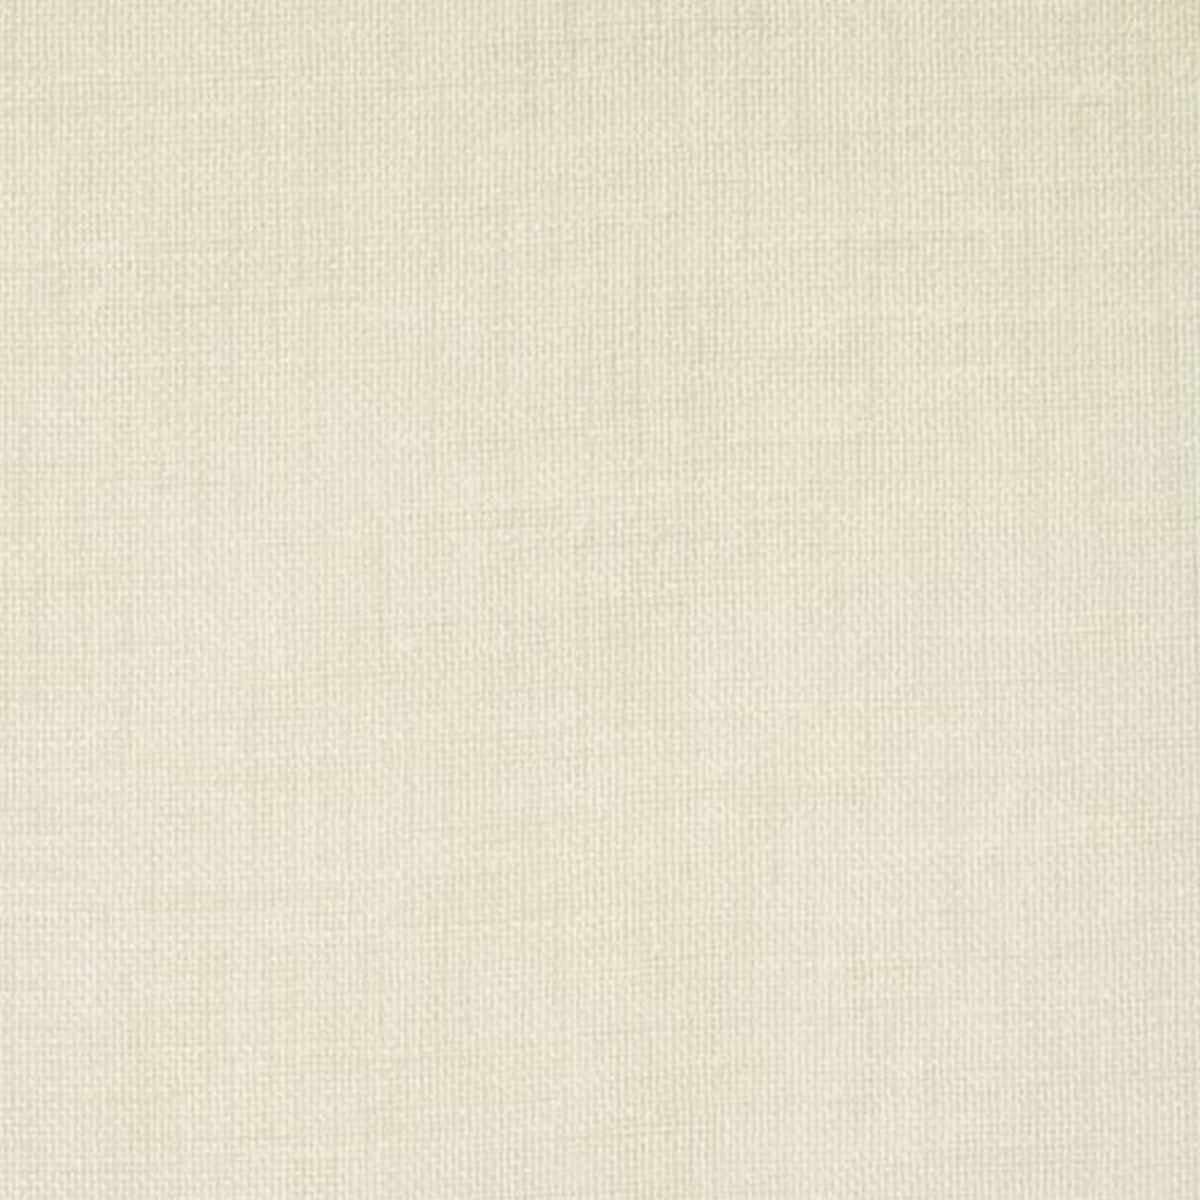 Chantilly Ivory Fabric by Chatham Glyn